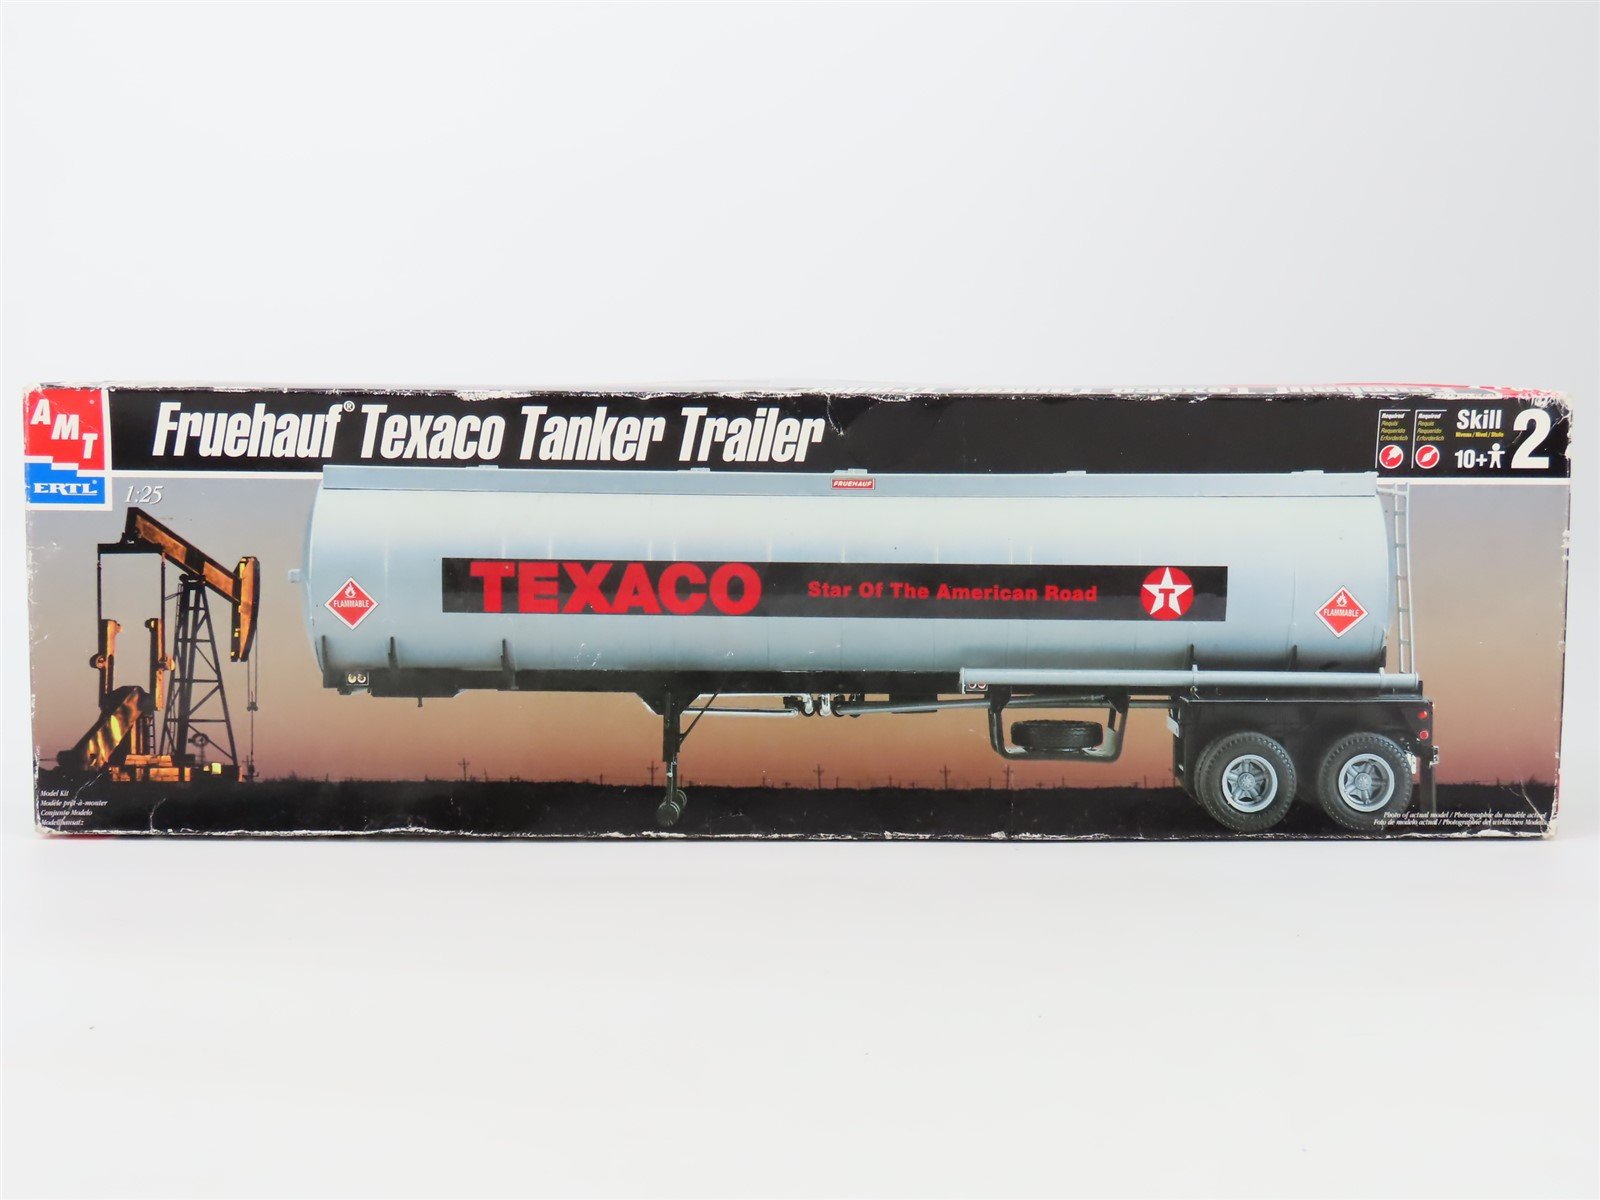 1:25 Scale AMT/ERTL 347999 Fruehauf Texaco Tanker Trailer Kit